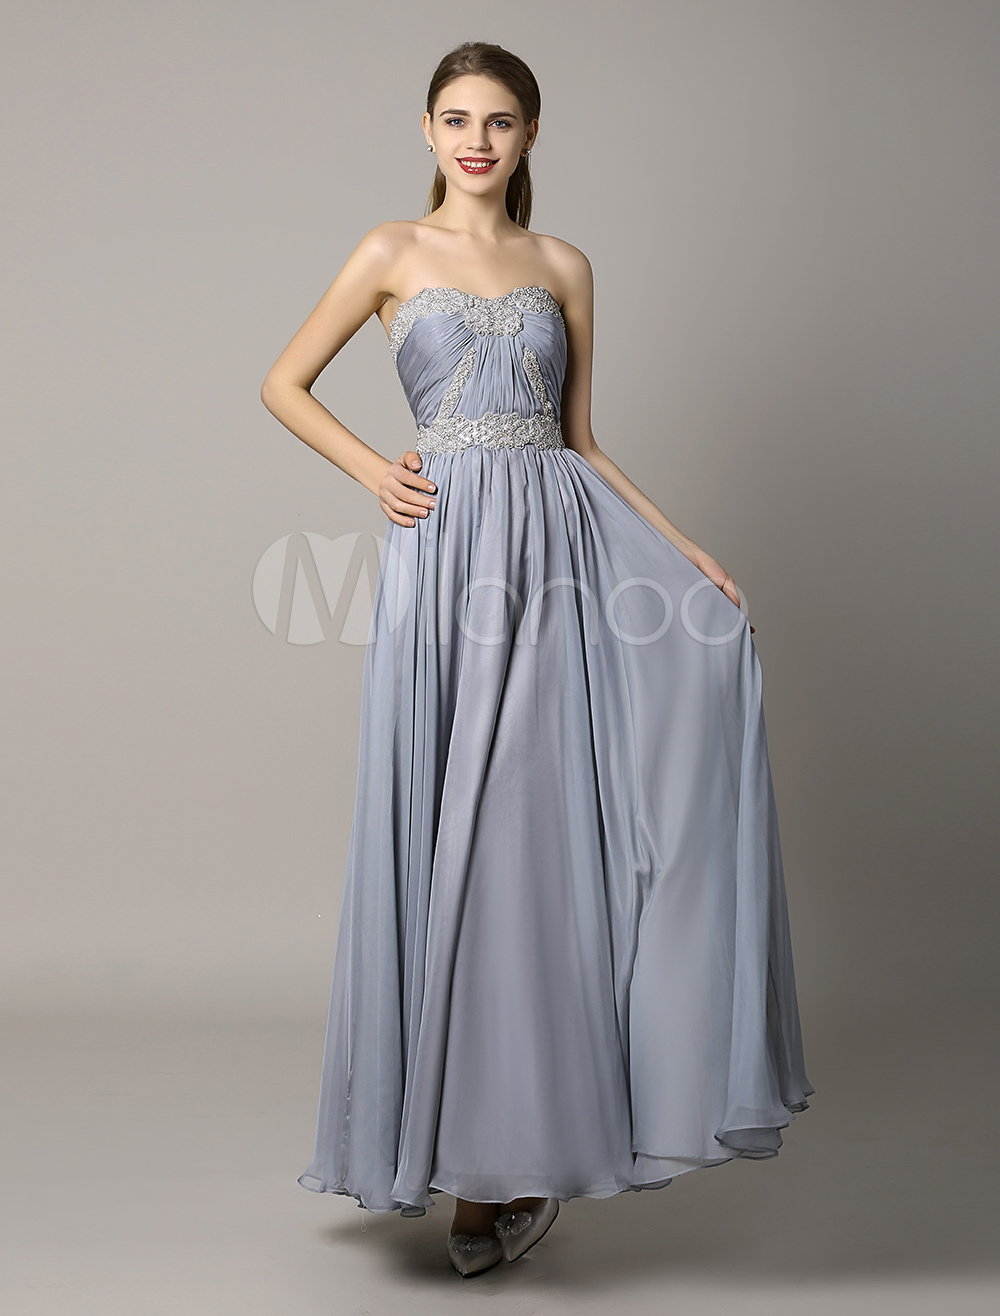 Elegant Beaded Sweetheart Grey Chiffon Prom Dress - Milanoo.com